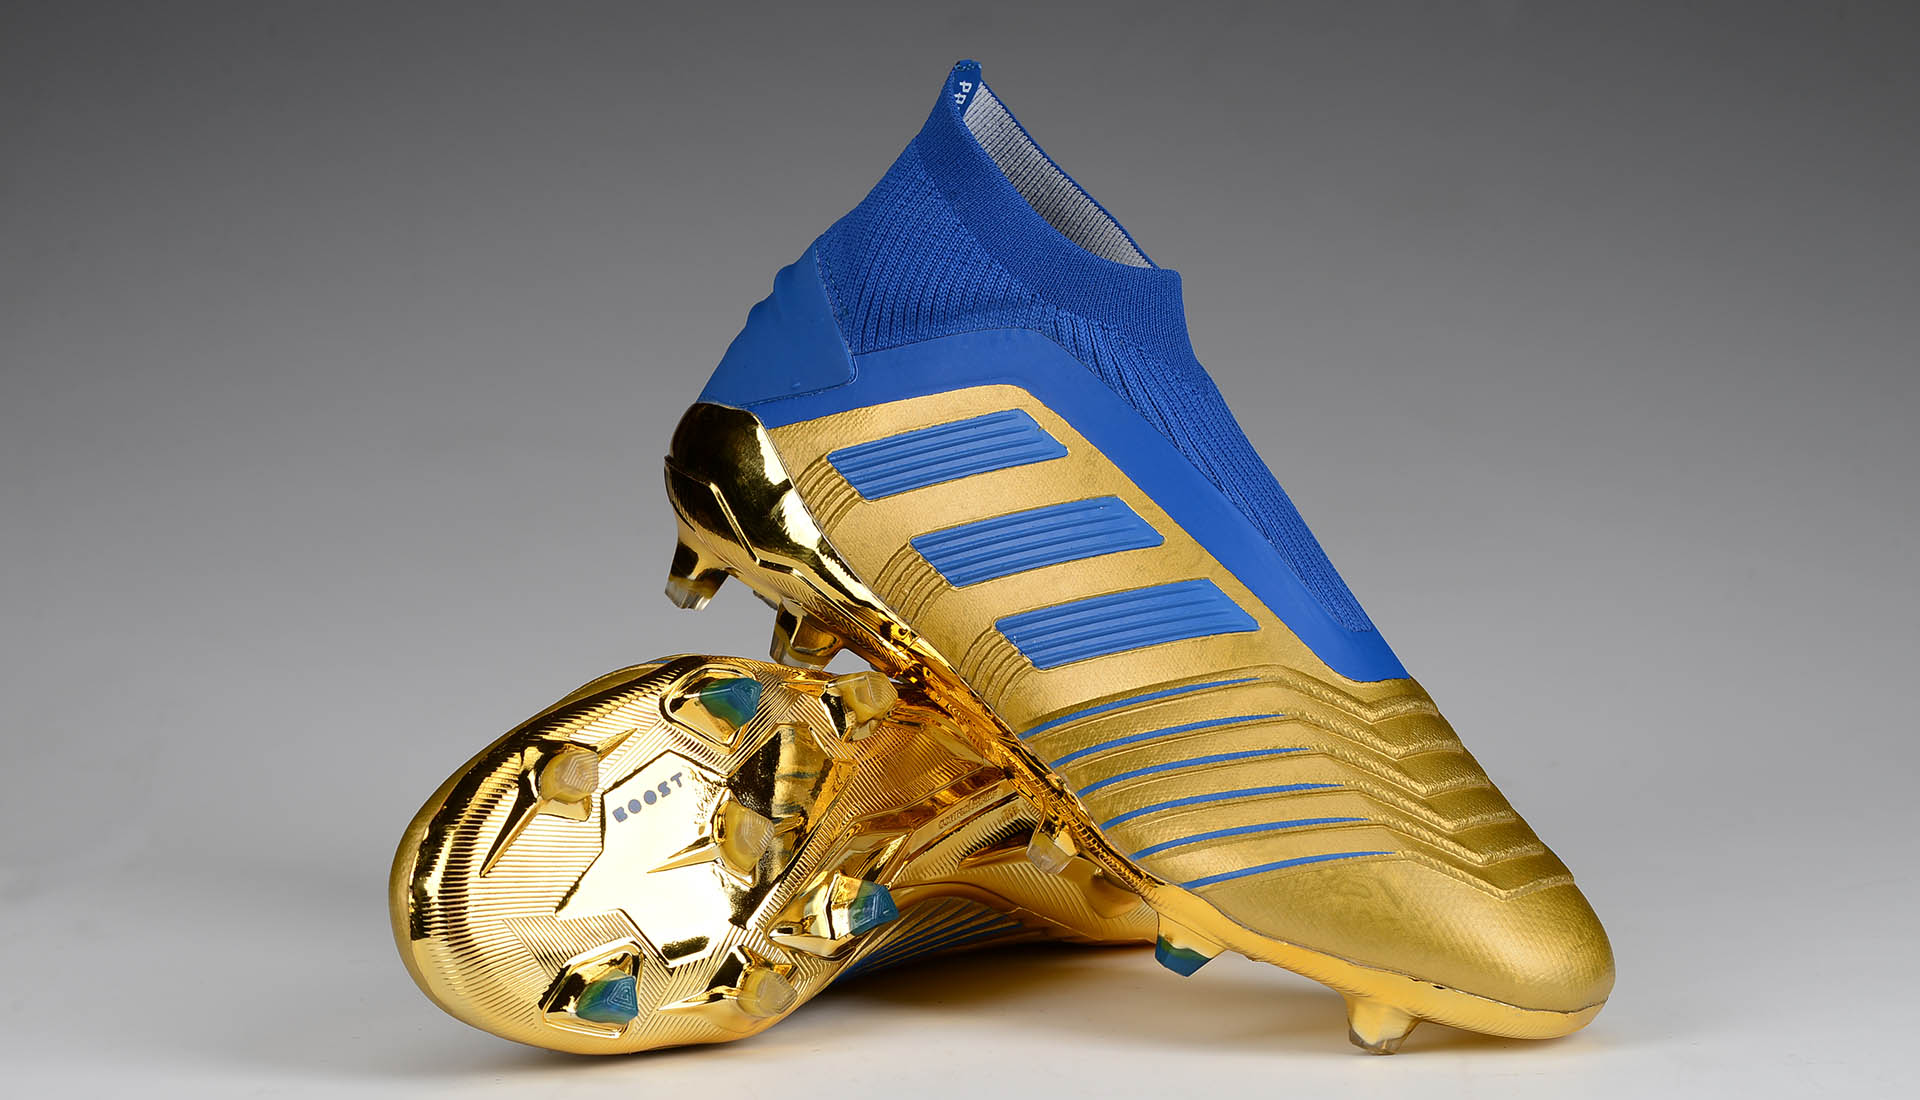 Adidas Predator 19+ FG 'Gold Blue' Soccer Cleats | Premium Footwear+Quality | Shop Now.